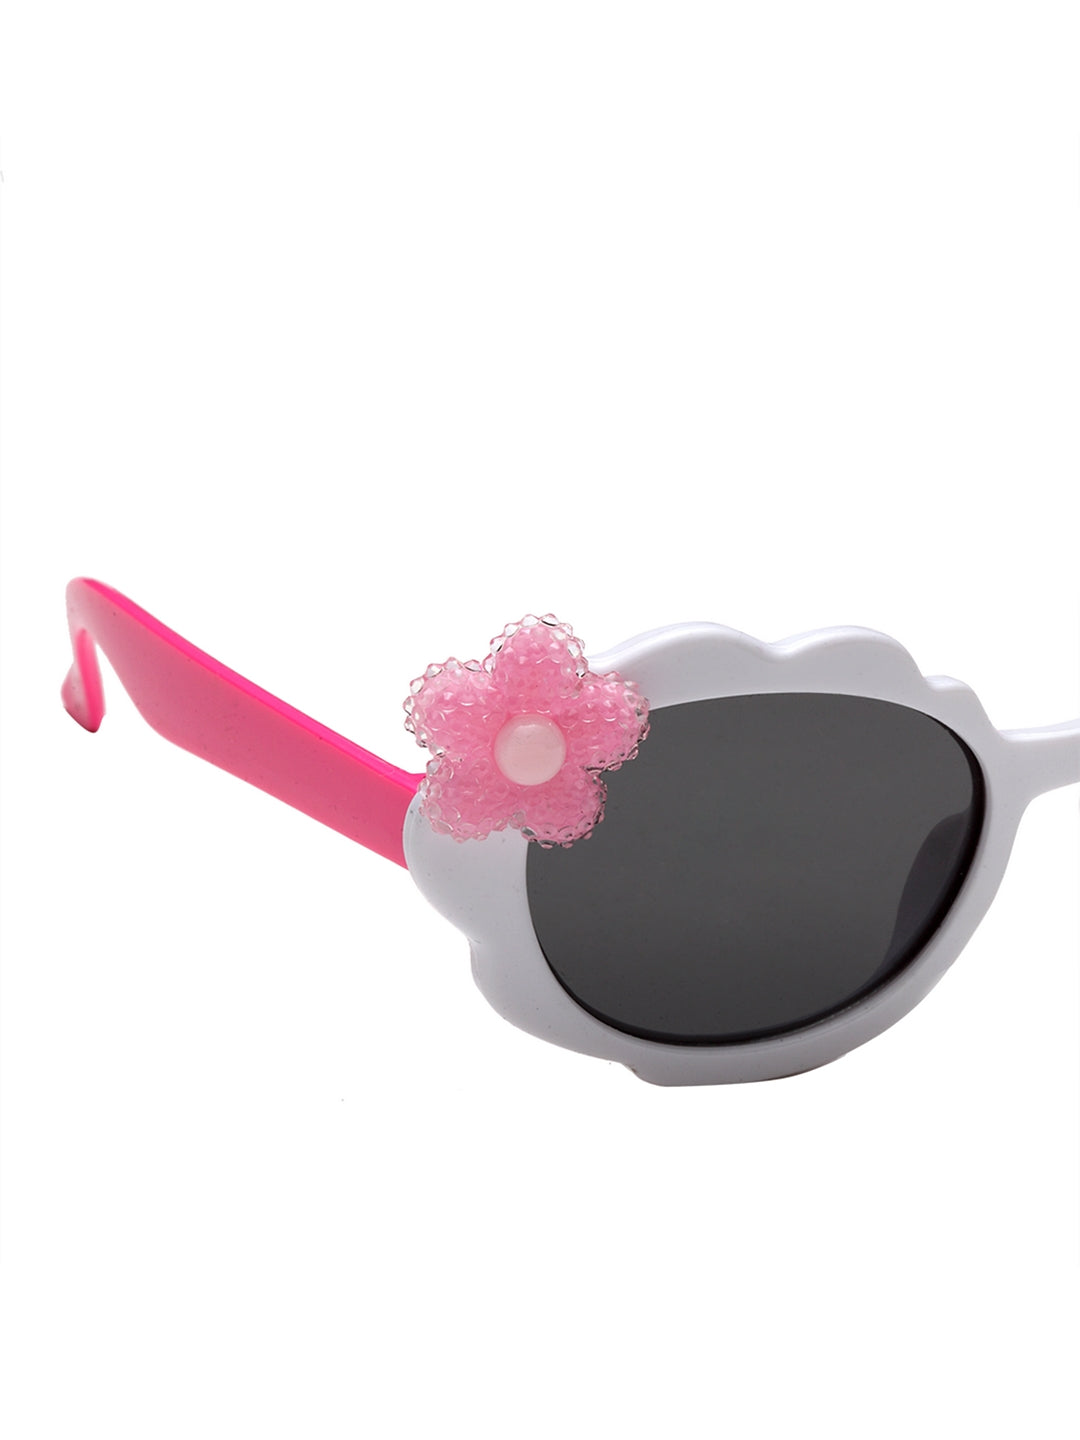 Stol'n Premium Attractive Fashionable UV-Protected Round Sunglasses - White